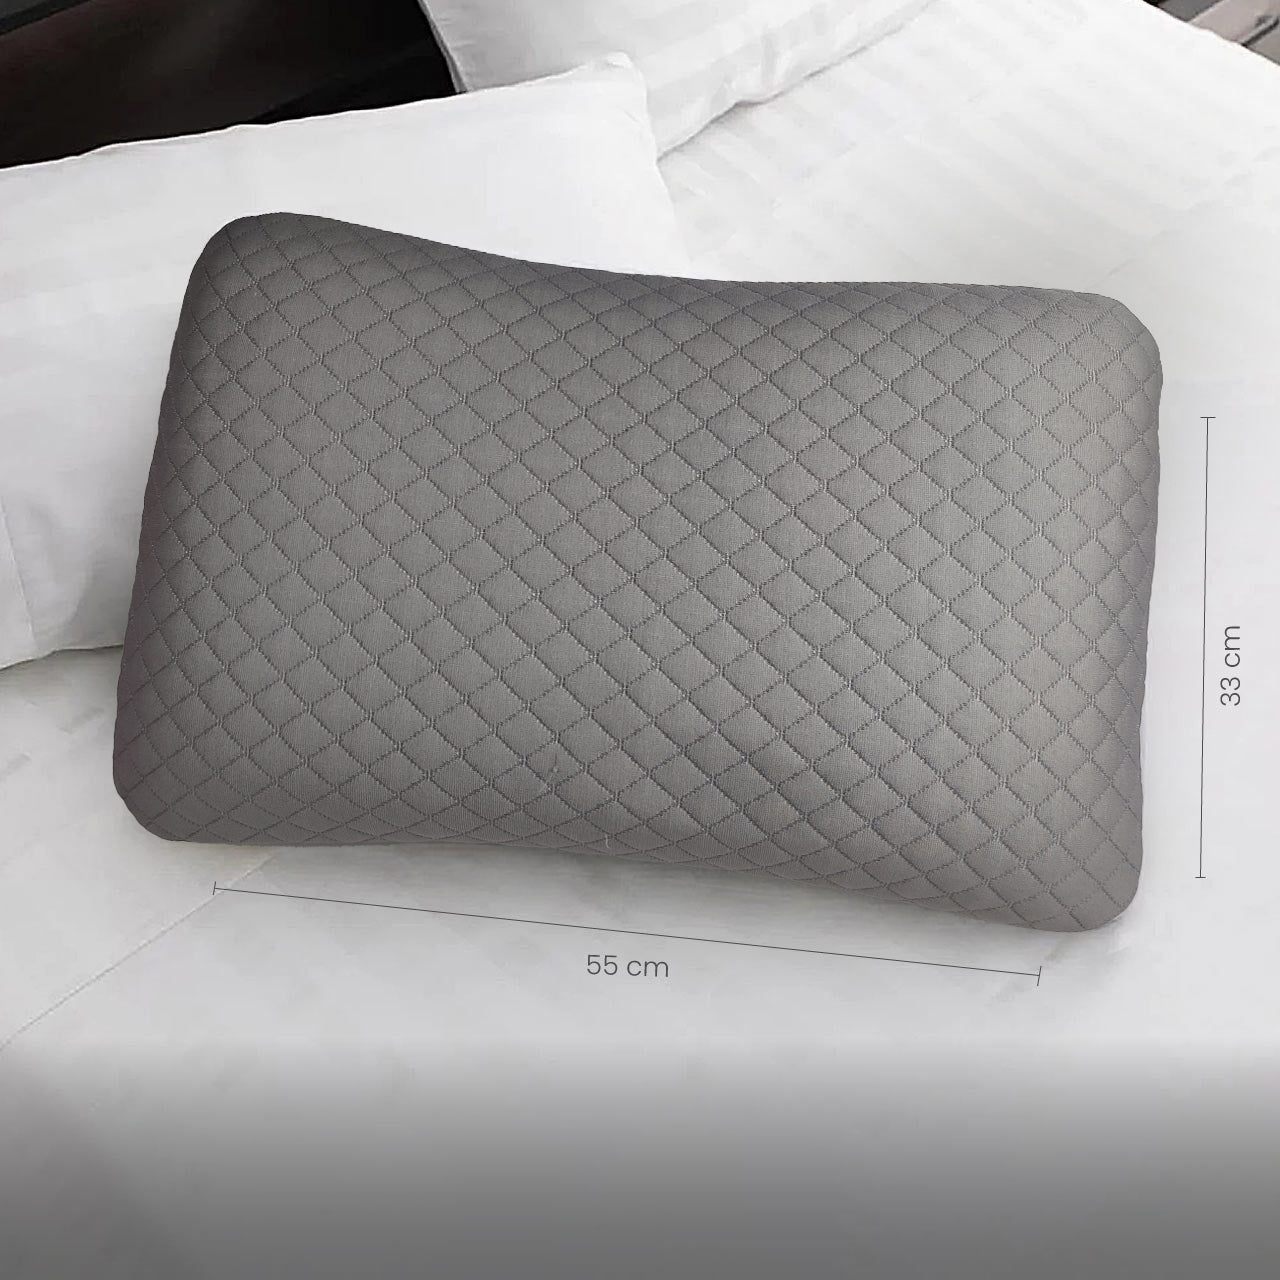 Shoulder Support Memory Foam Pillow Anti-Stress  35x55x12cm - Grey